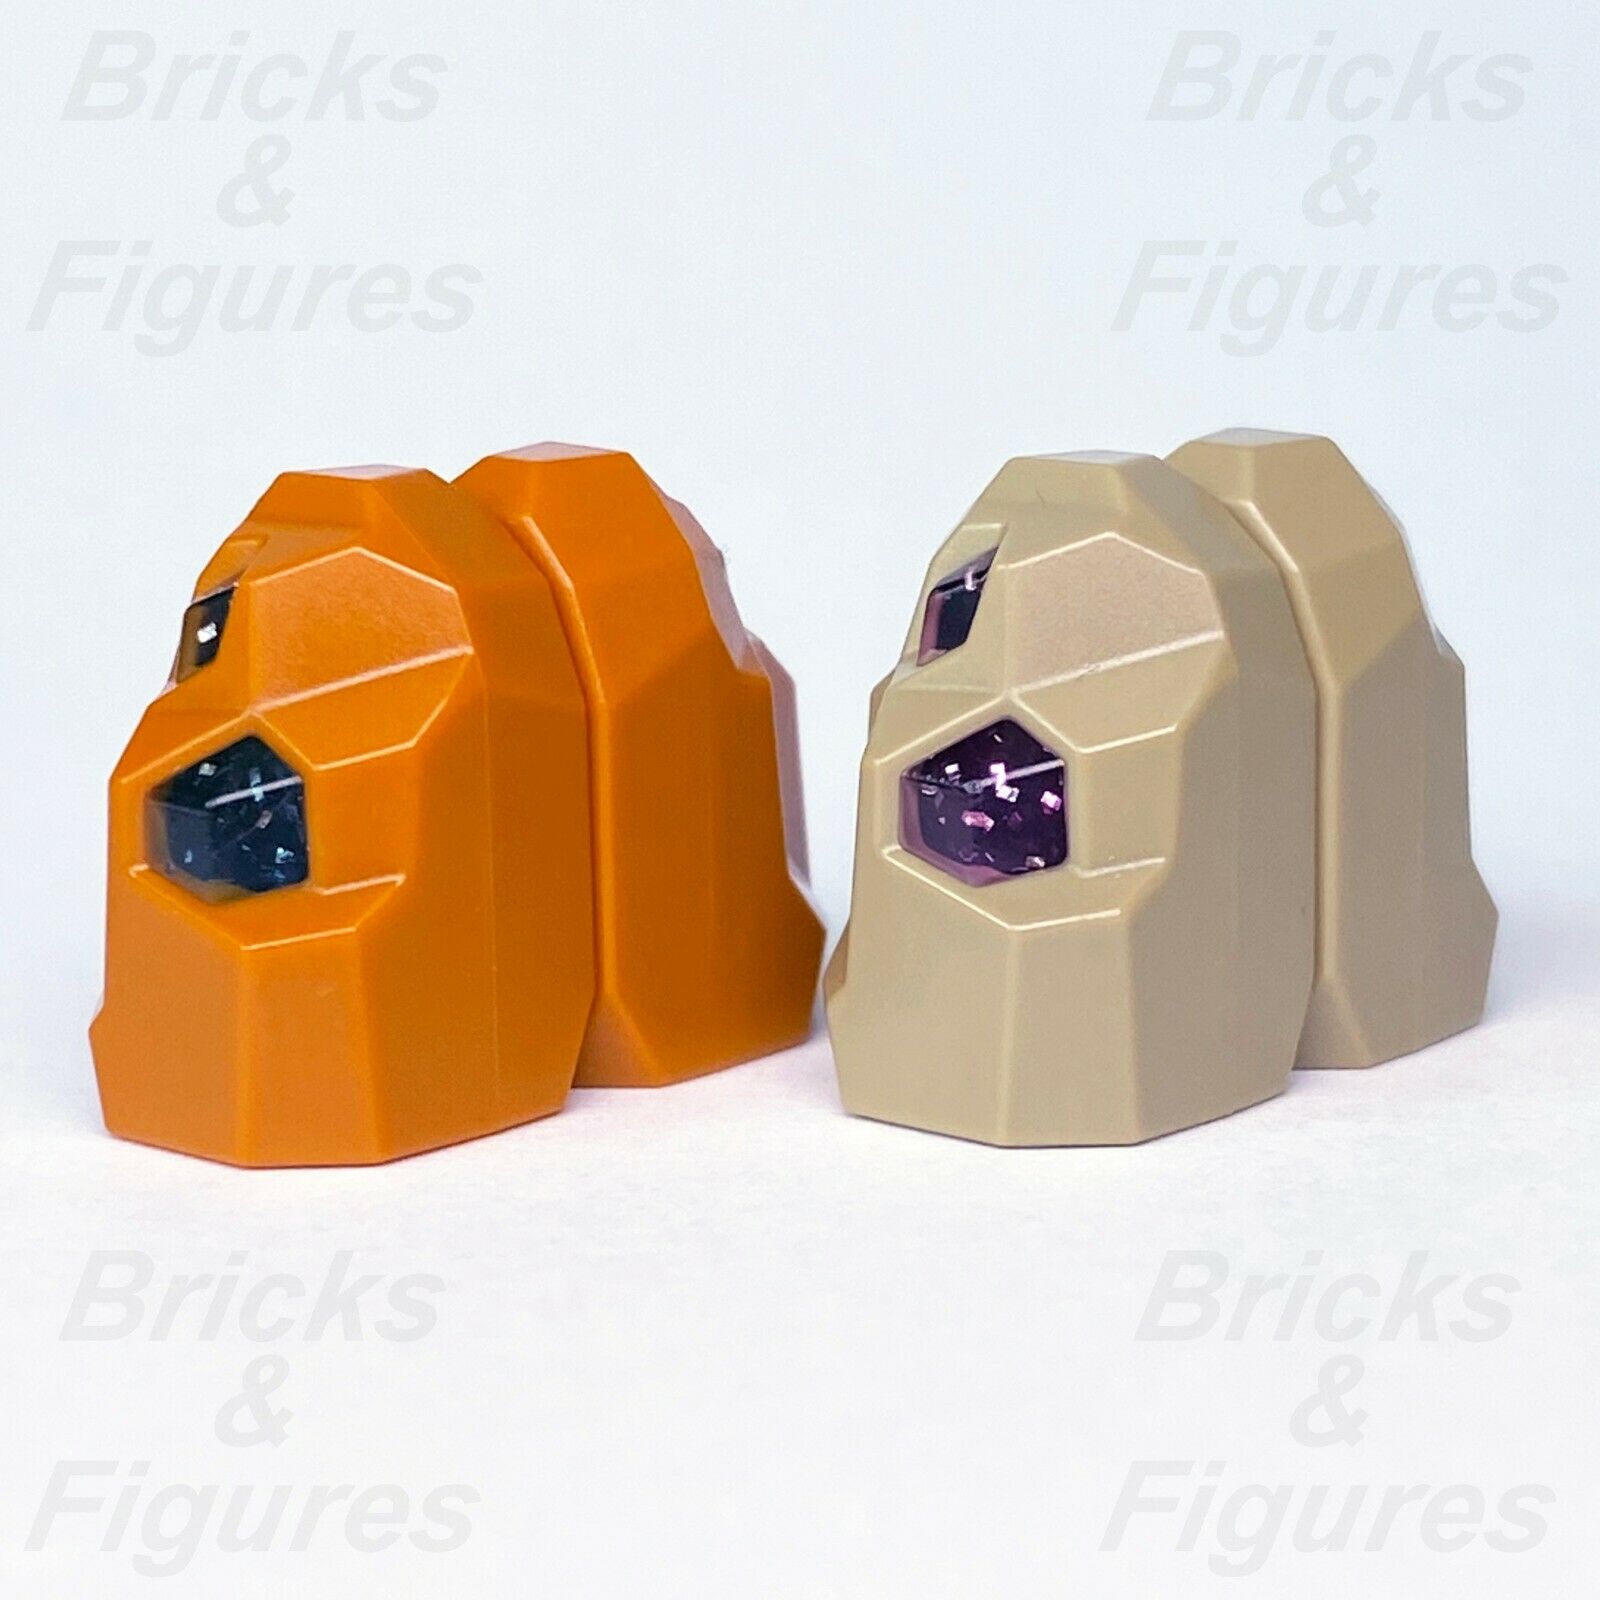 4 x Town City LEGO Rock Geode with Light Blue Dark Pink Crystals 60227 60228 - Bricks & Figures